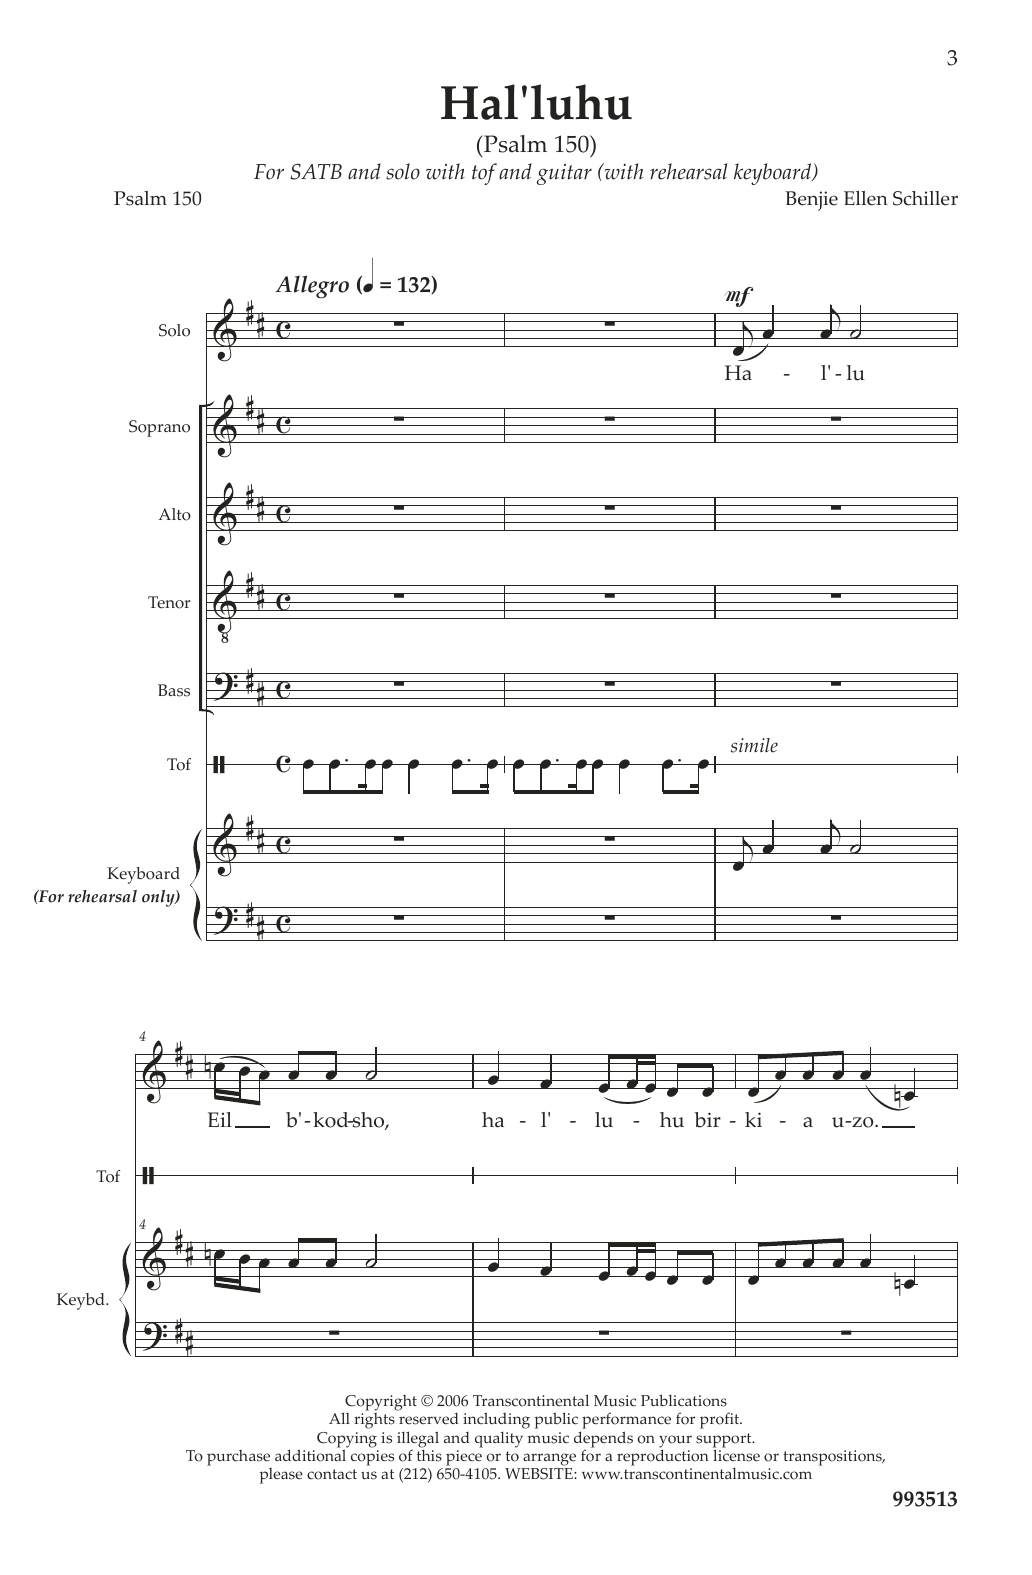 Benjie-Ellen Schiller Hal'luhu (Psalm 150) Sheet Music Notes & Chords for SATB Choir - Download or Print PDF